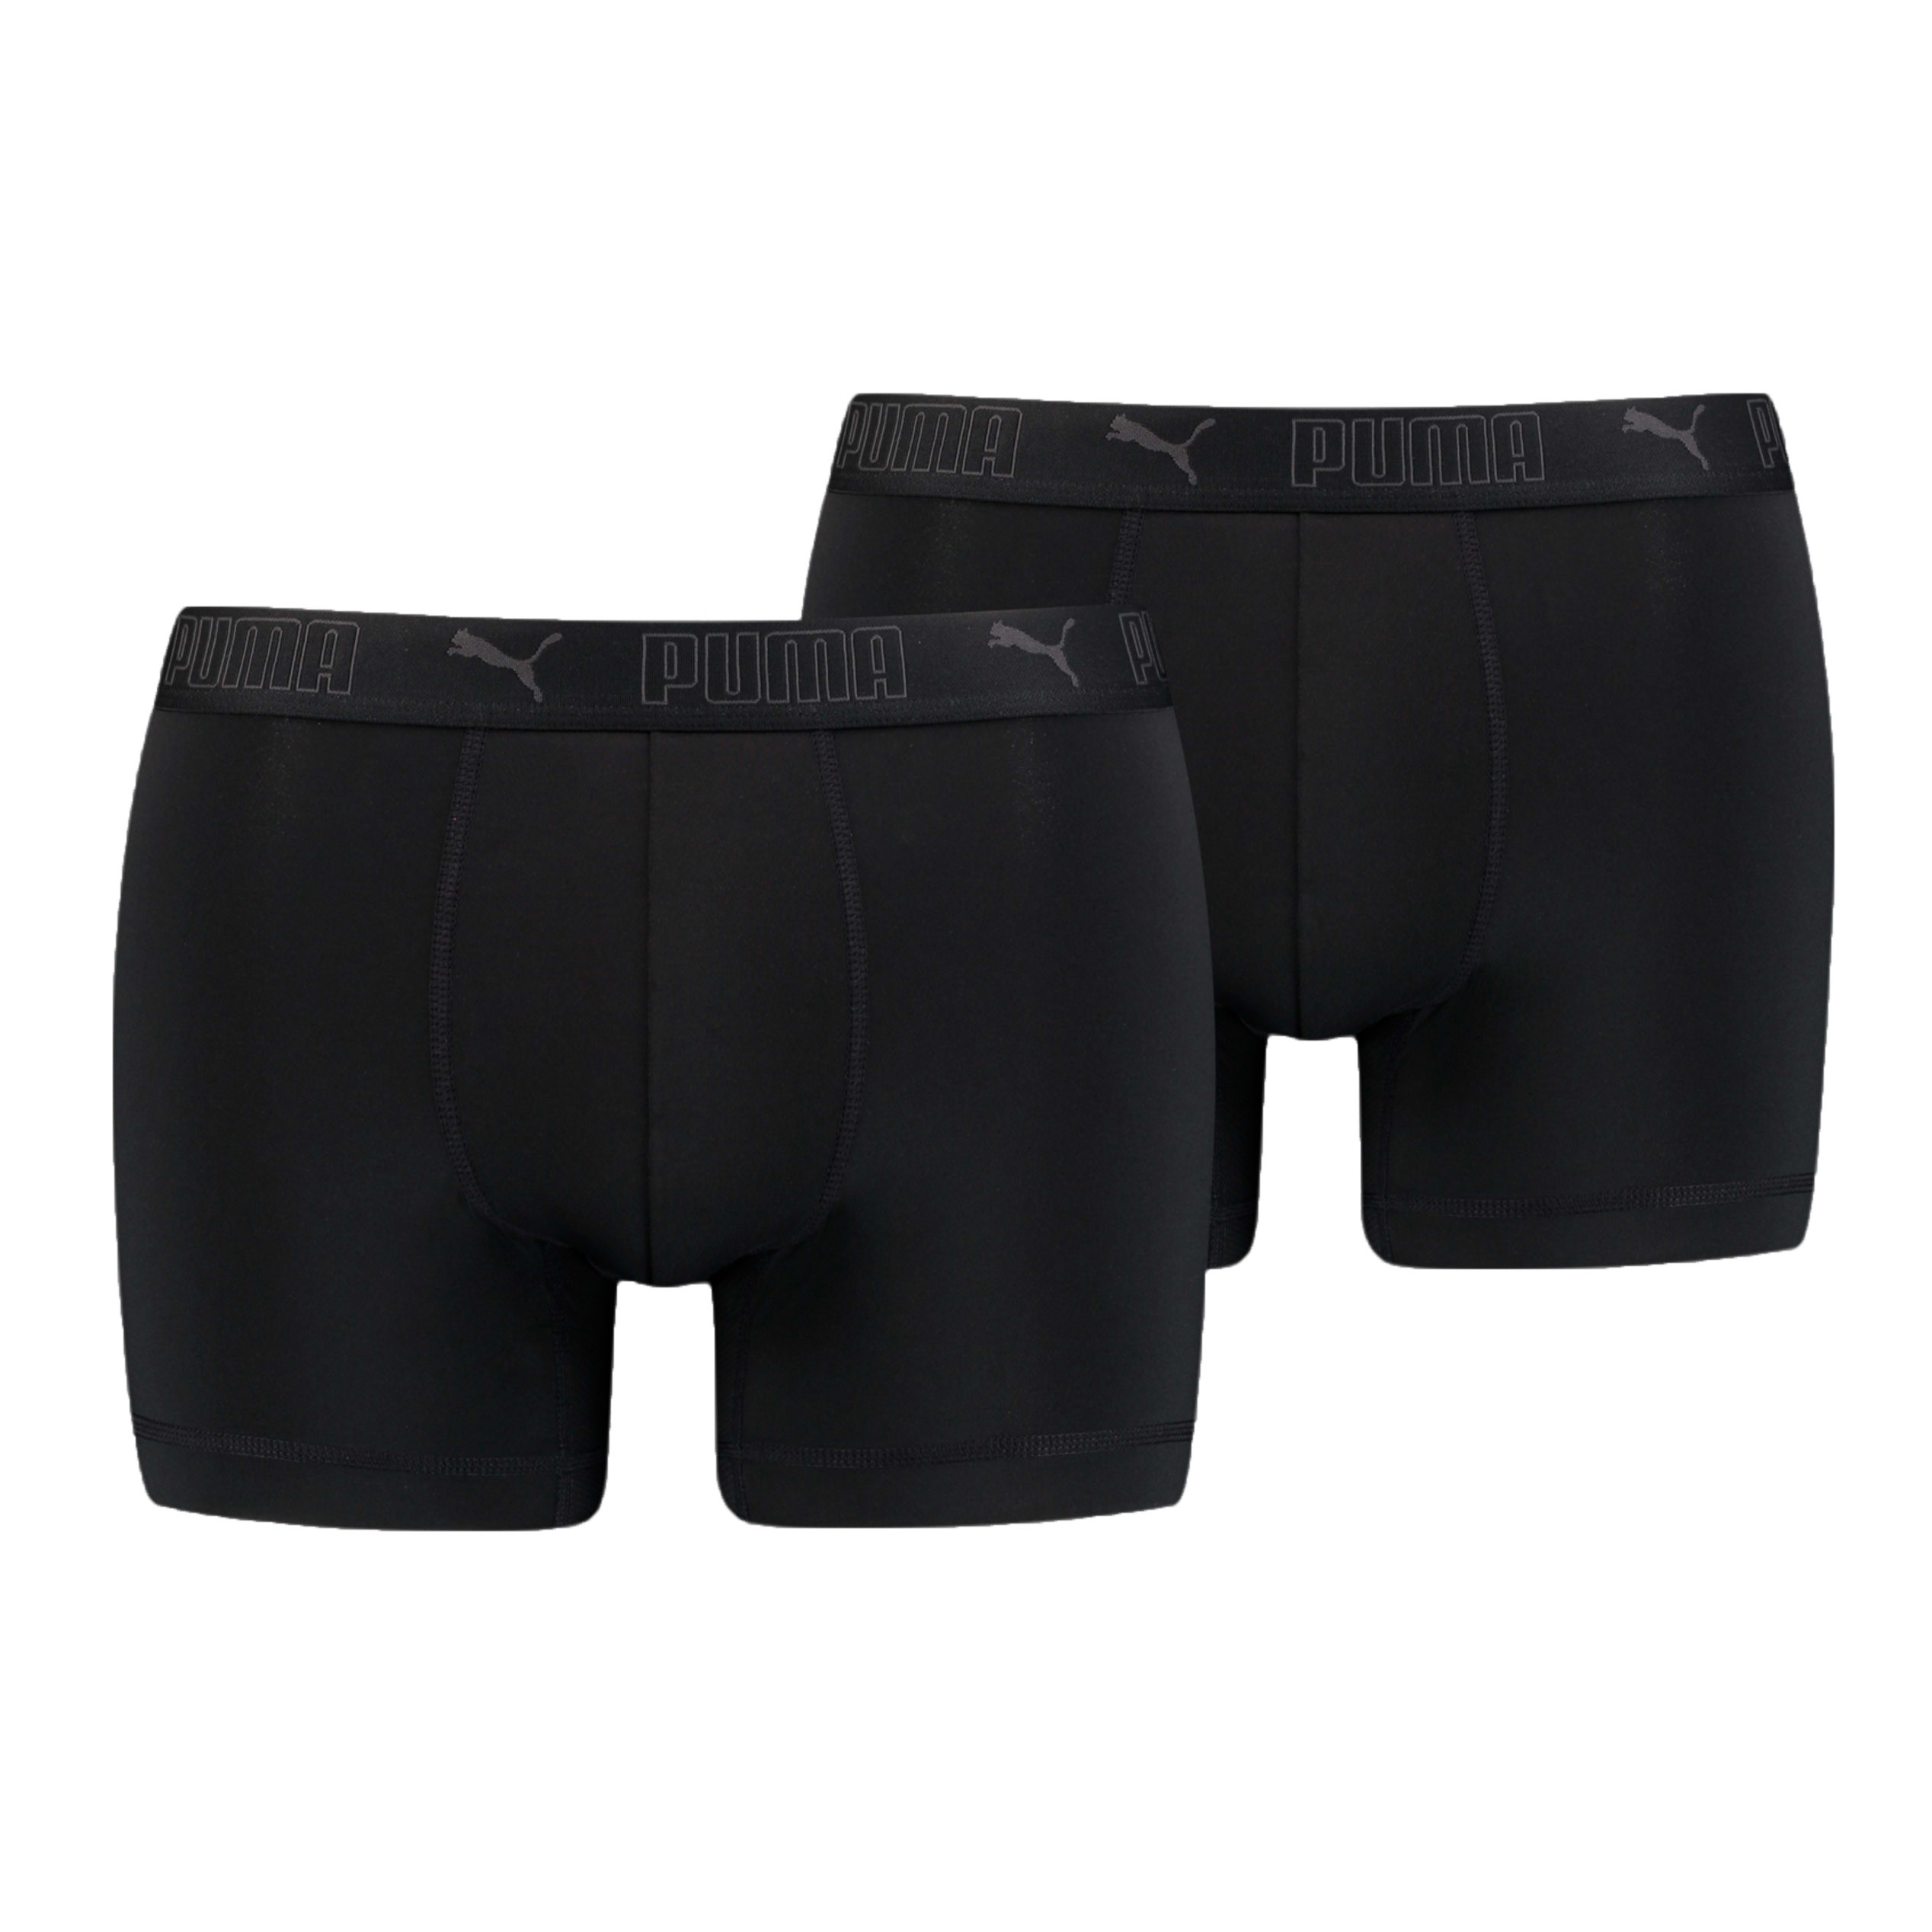 Set of 2 sport boxers in microfiber PUMA - black: Underwear for man